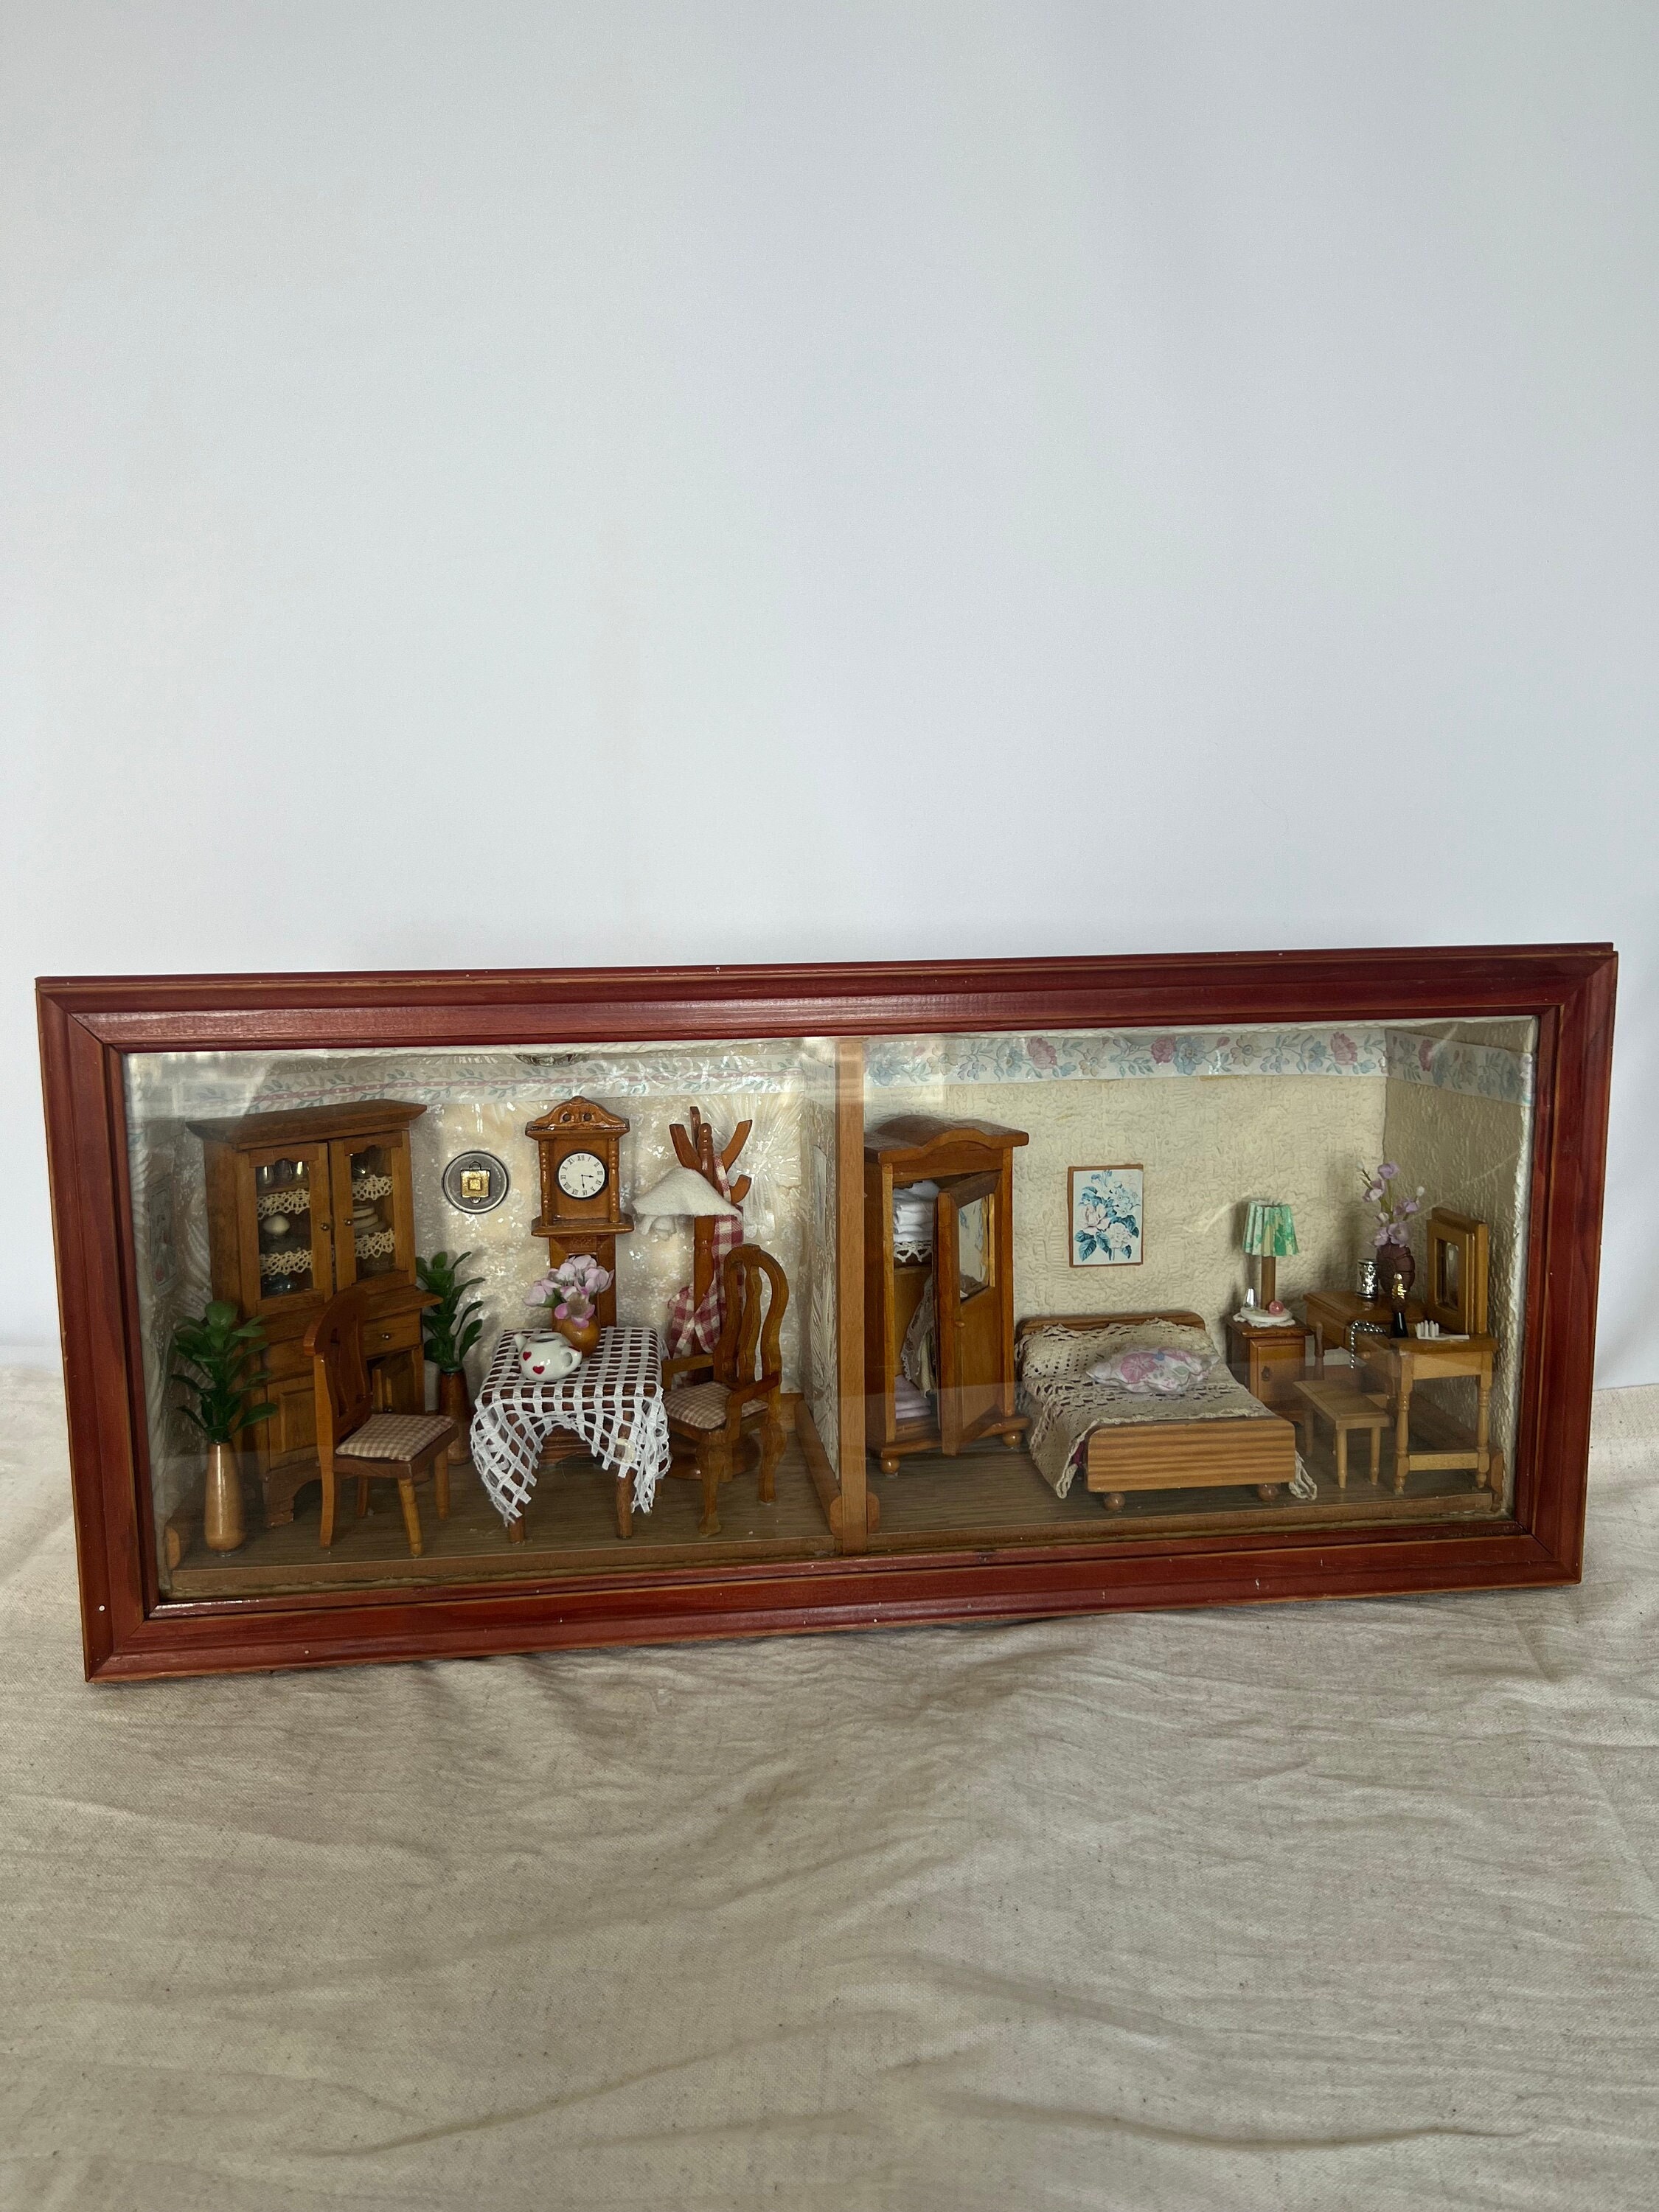 THE FISHERMAN a Miniature Room Box Diorama Handmade